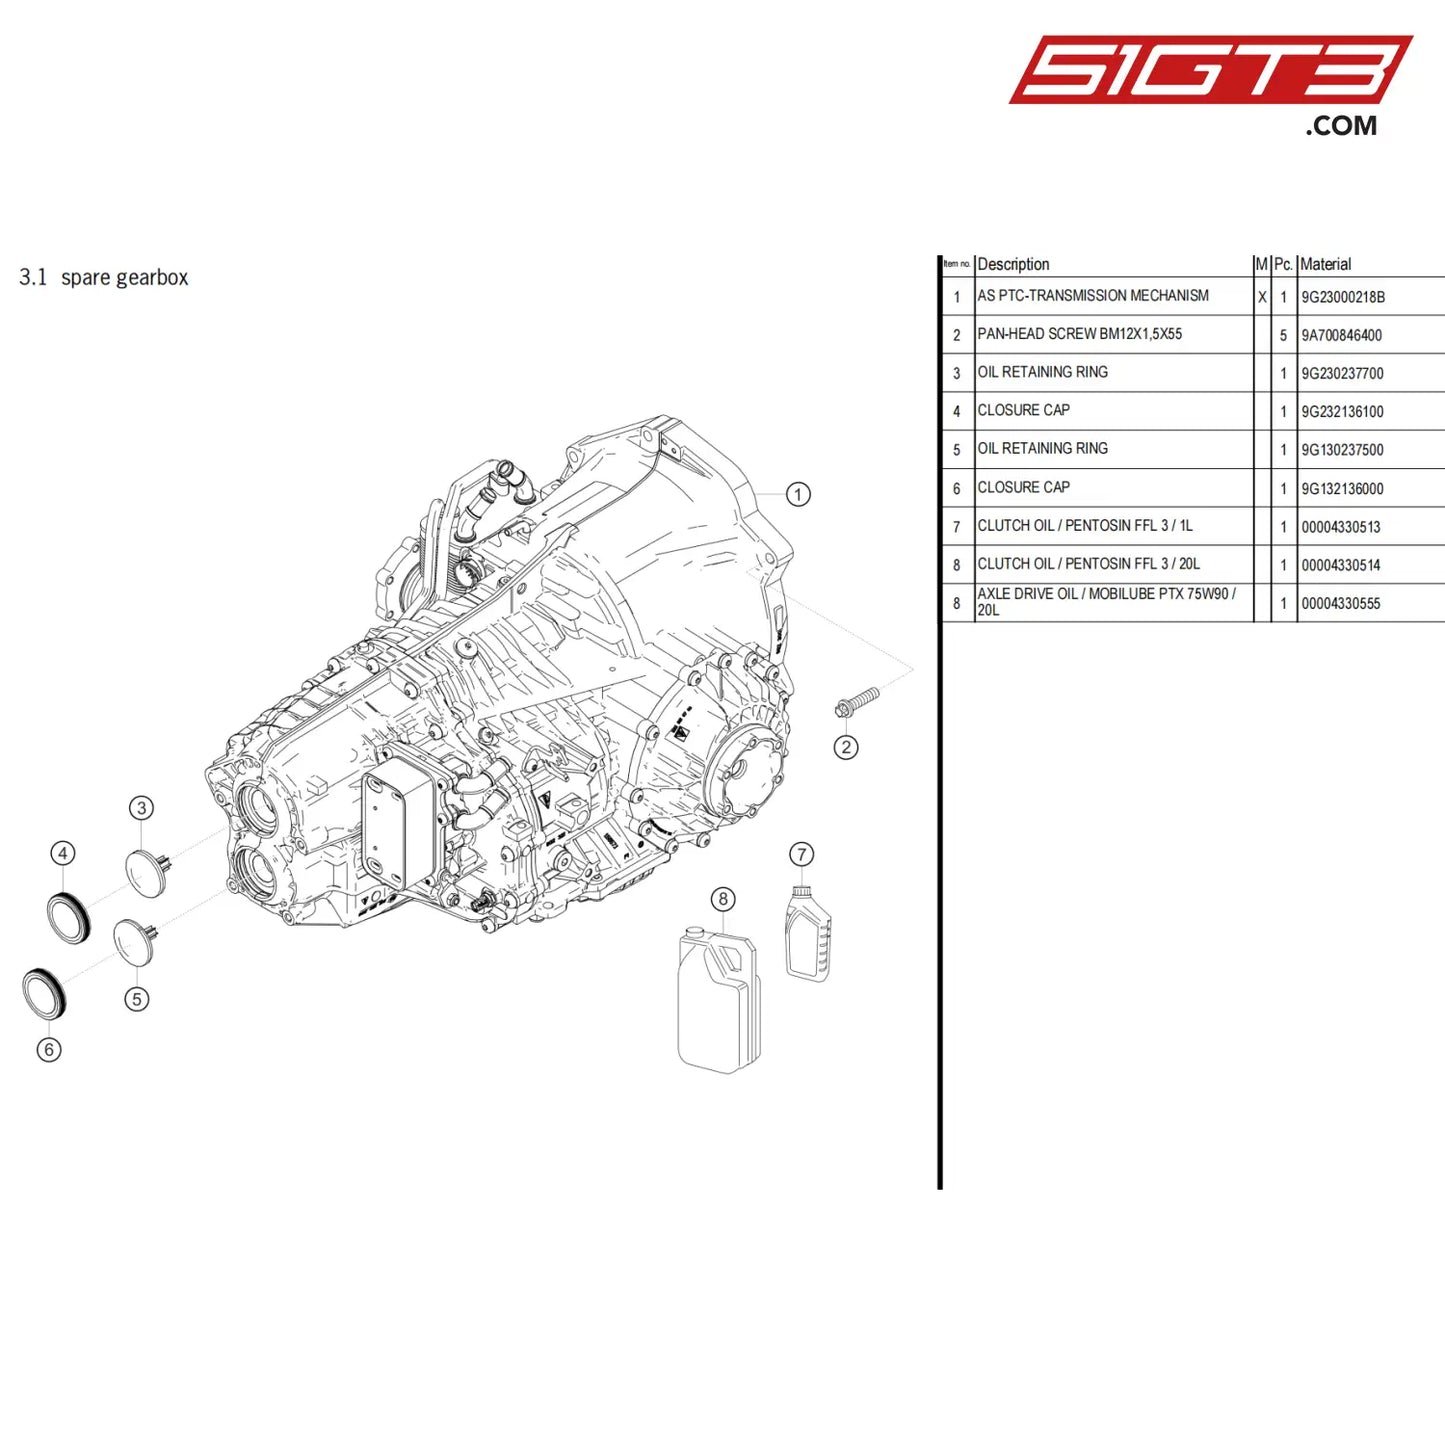 Oil Retaining Ring - 9G130237500 [Porsche 718 Cayman Gt4 Clubsport] Spare Gearbox